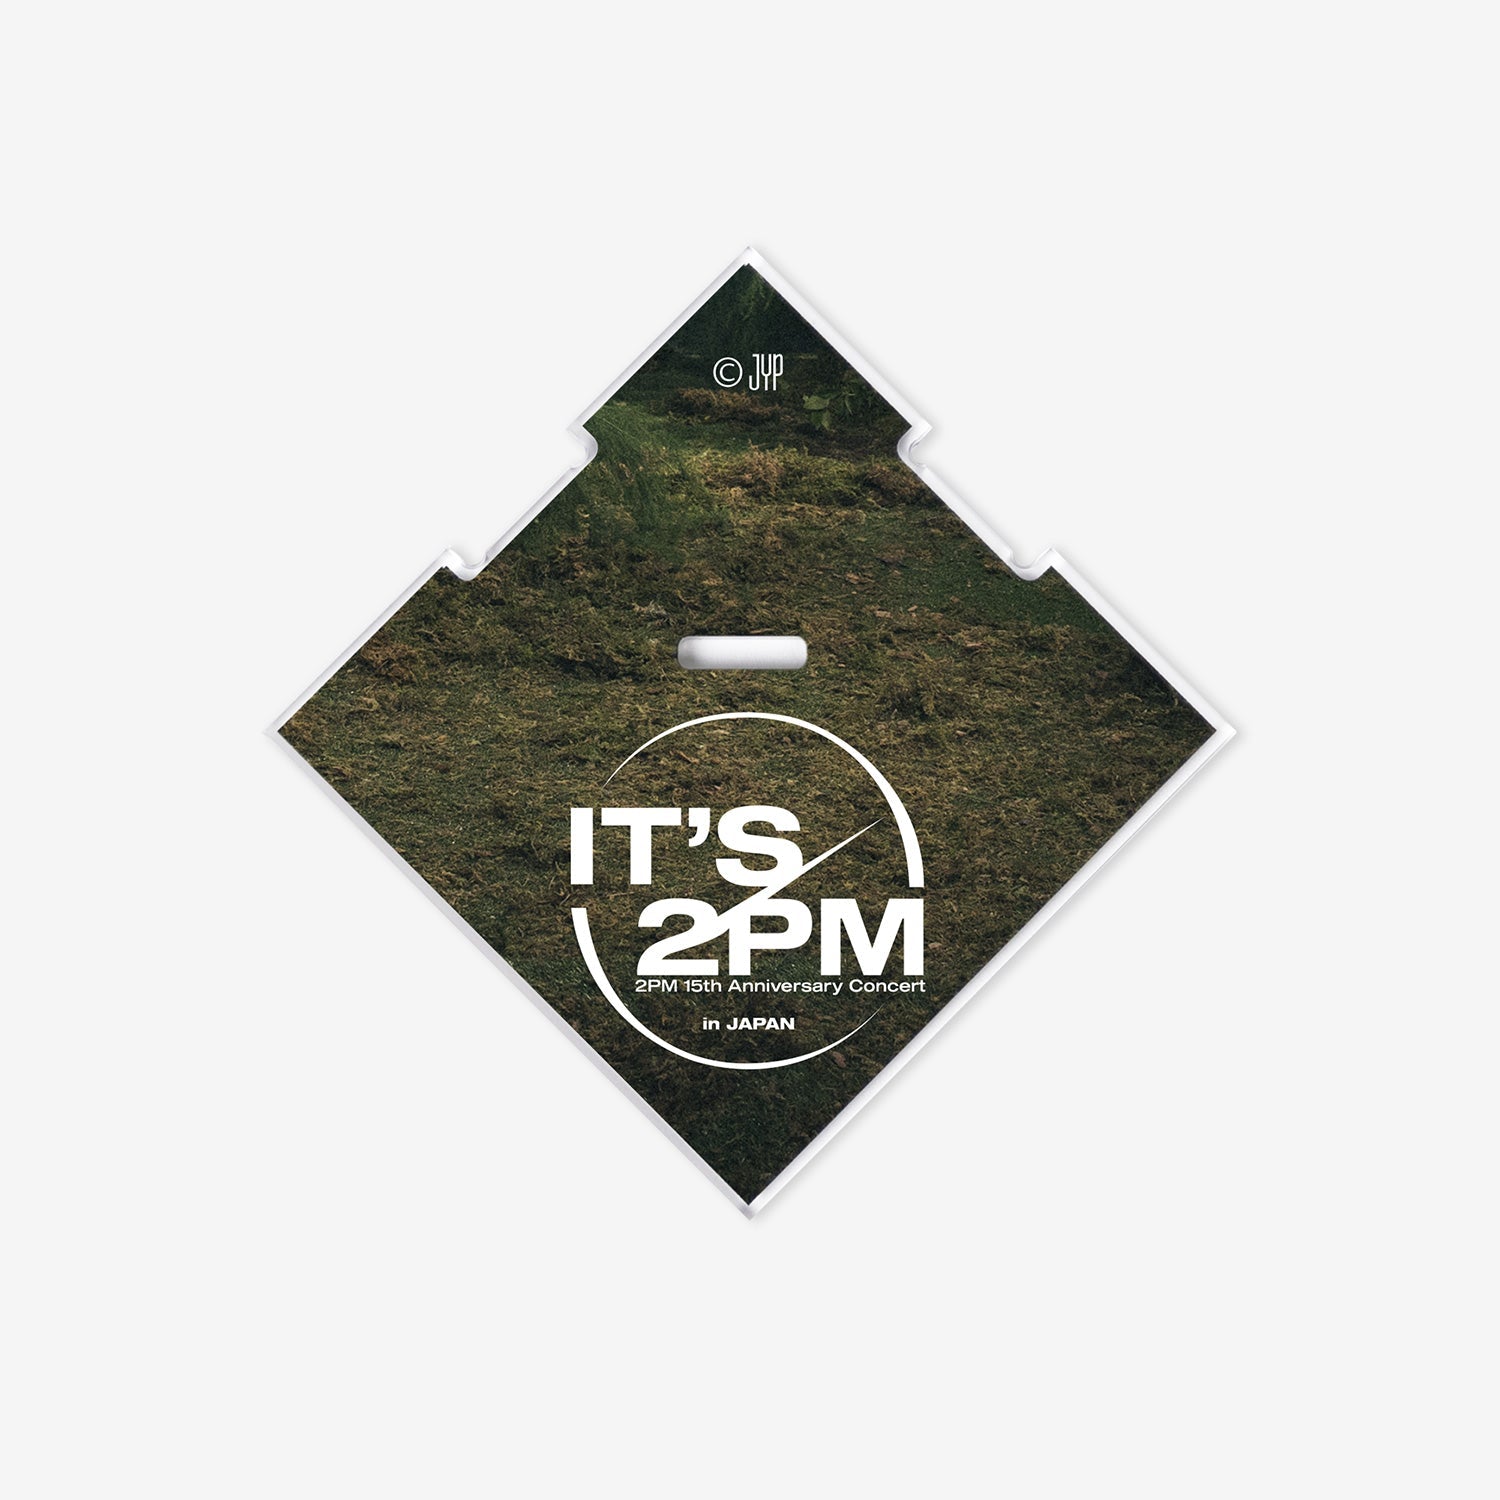 ACRYLIC STAND - Jun. K / 2PM『It's 2PM』